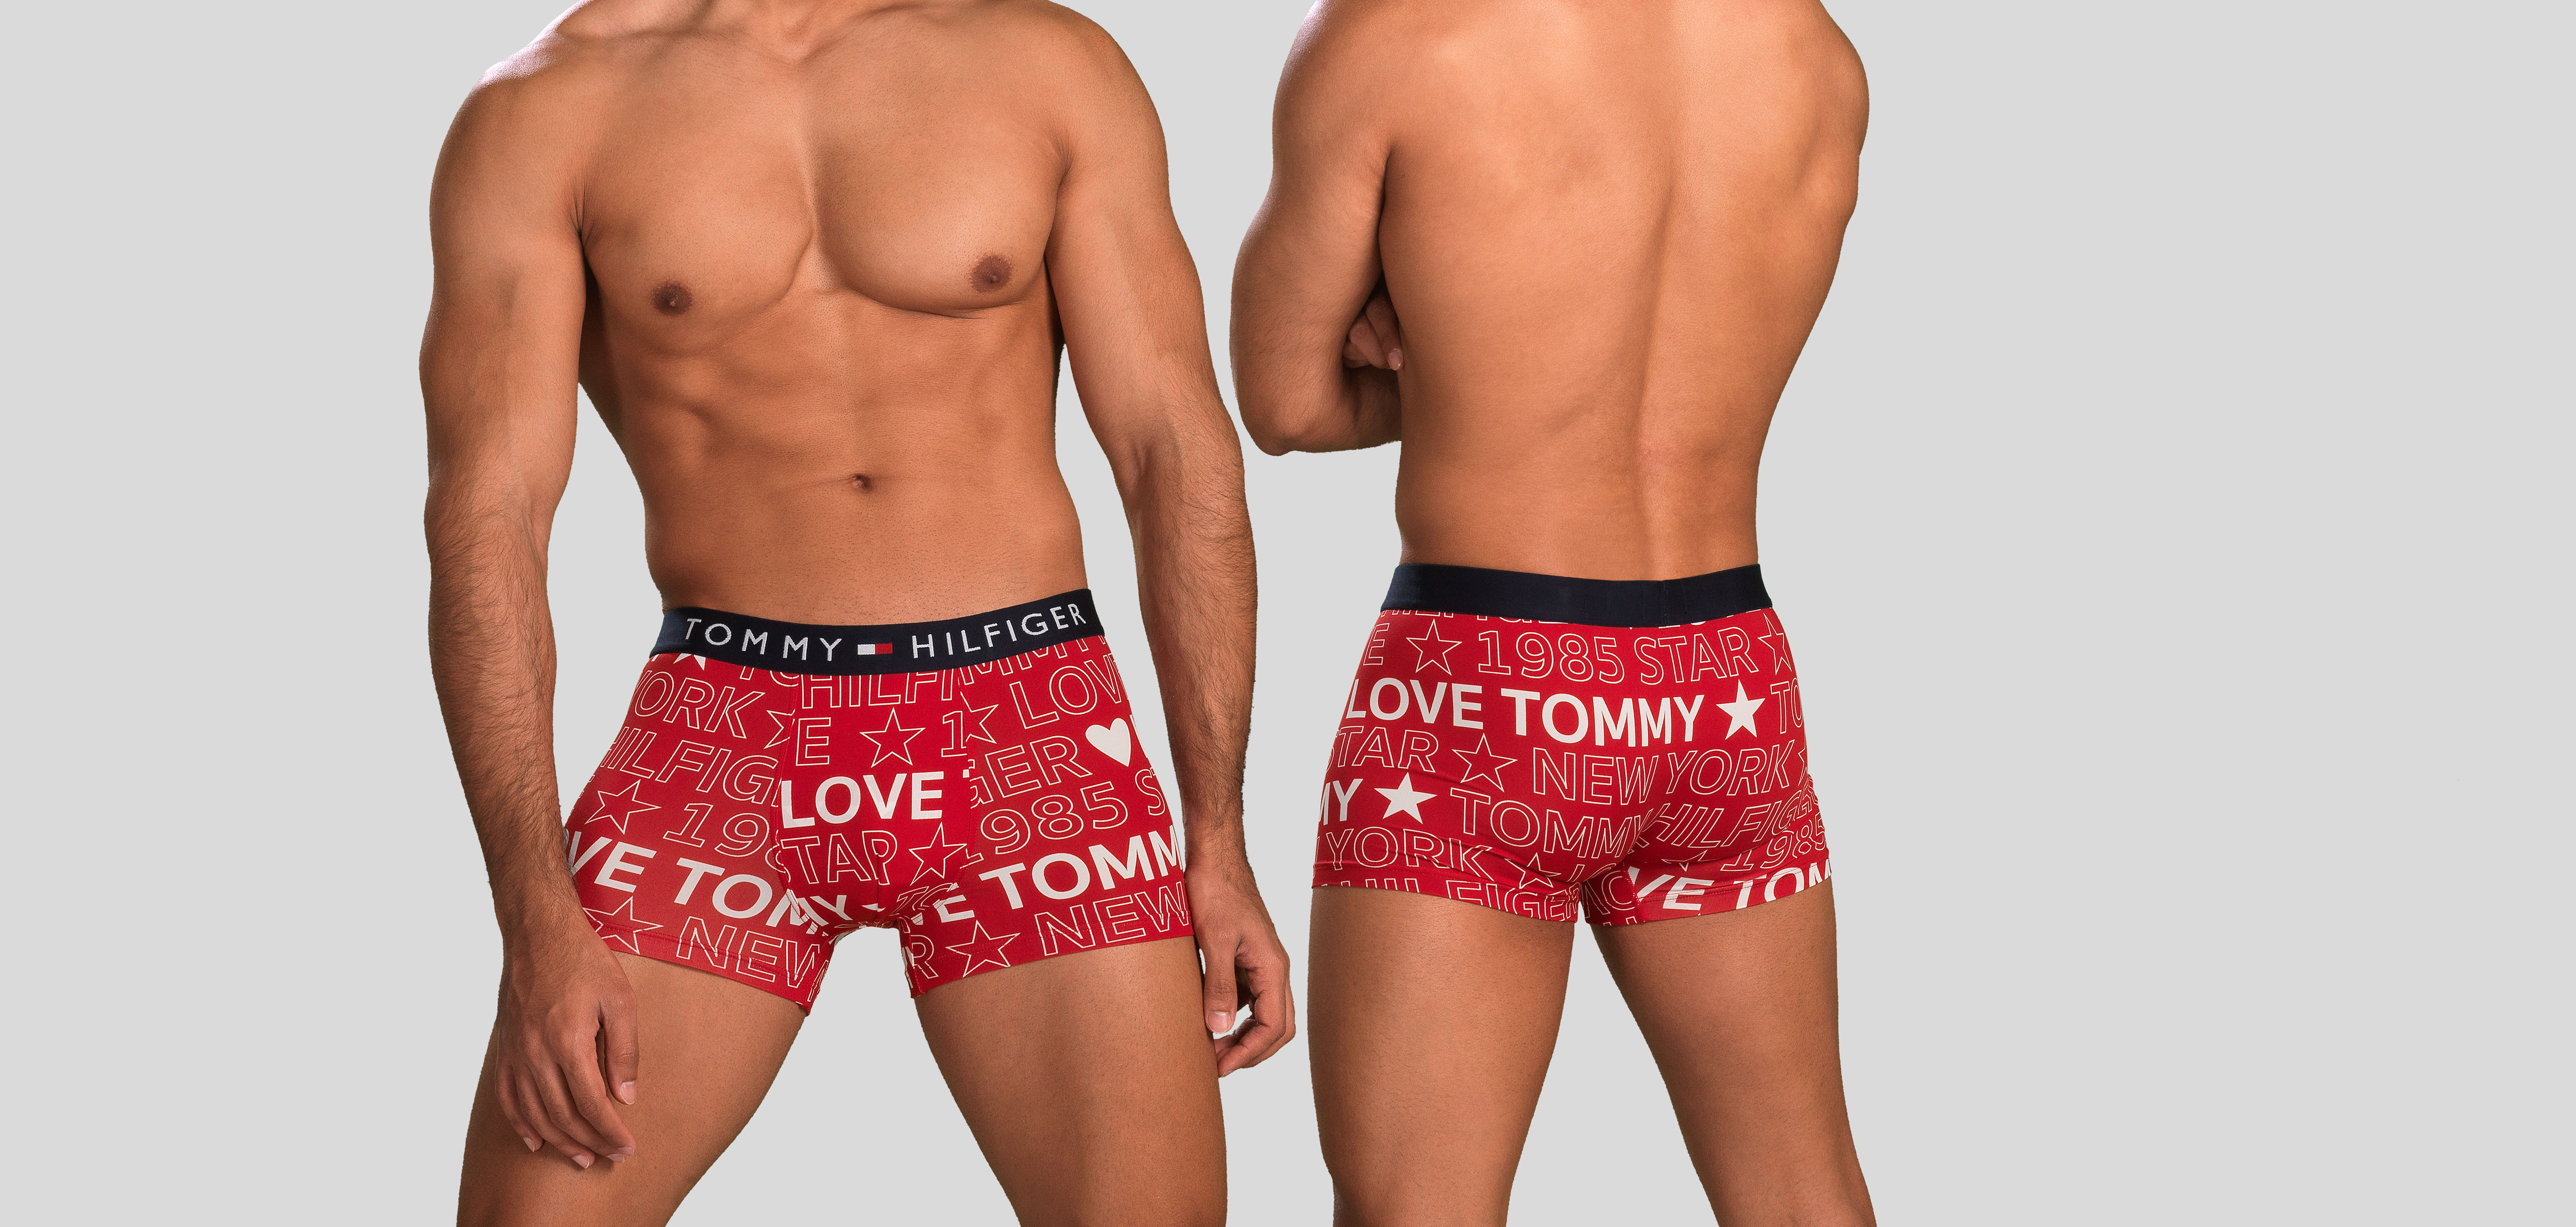 Tommy Hilfiger Love Tommy Valentine Star Boxershort 524, color Nee